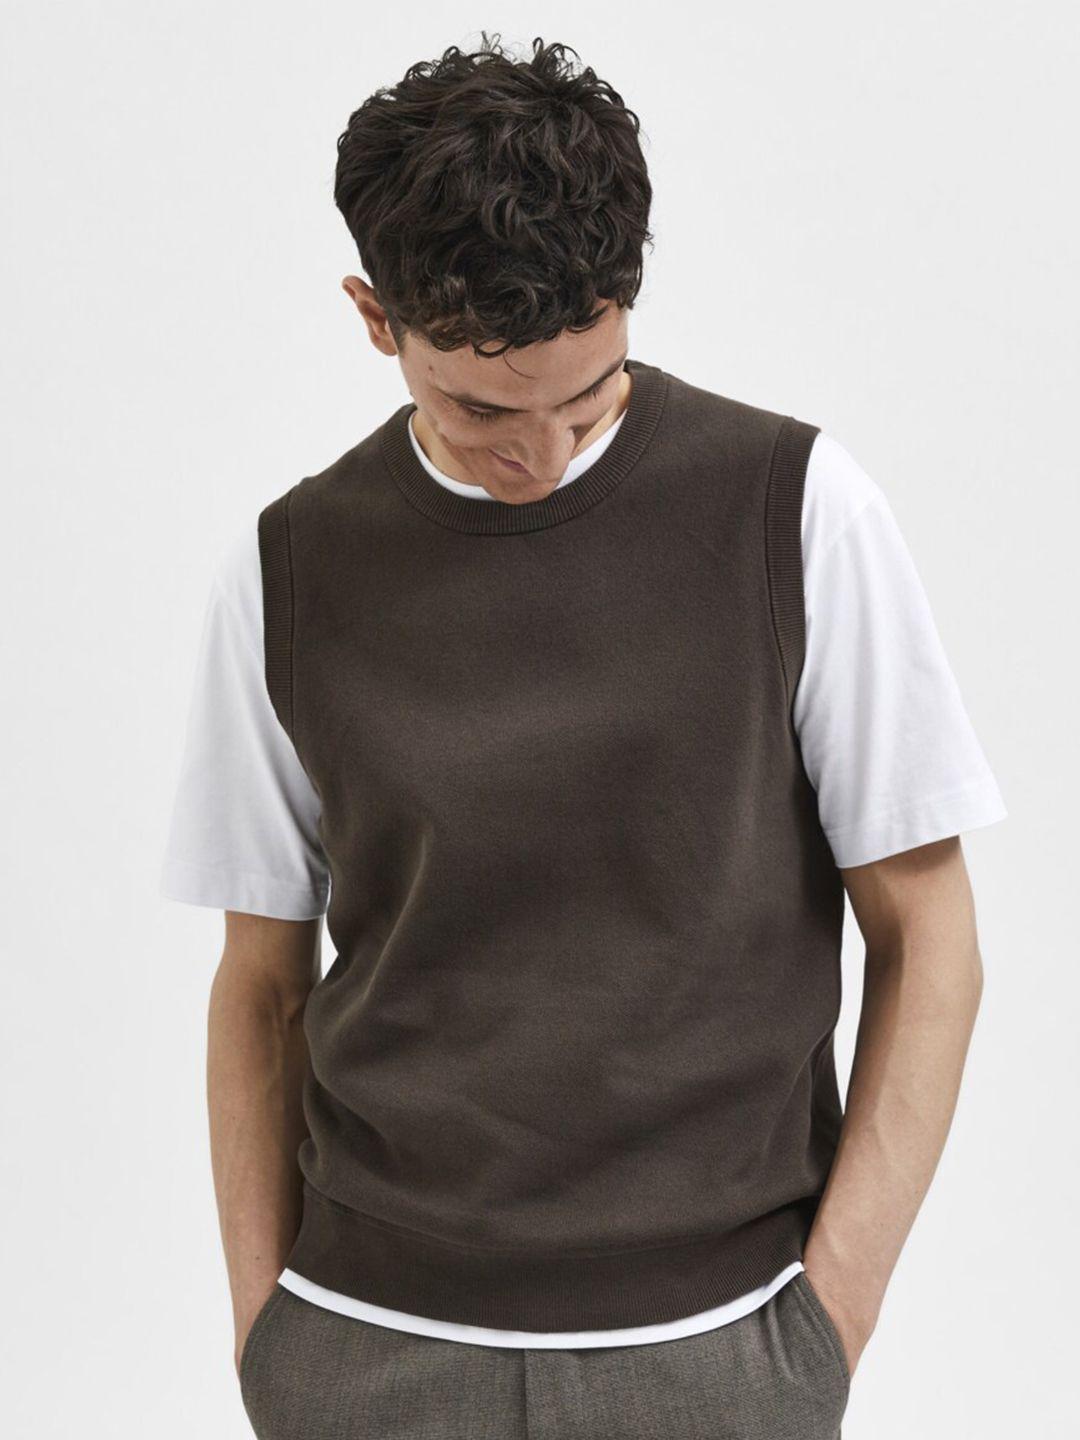 selected men brown solid sweater vest